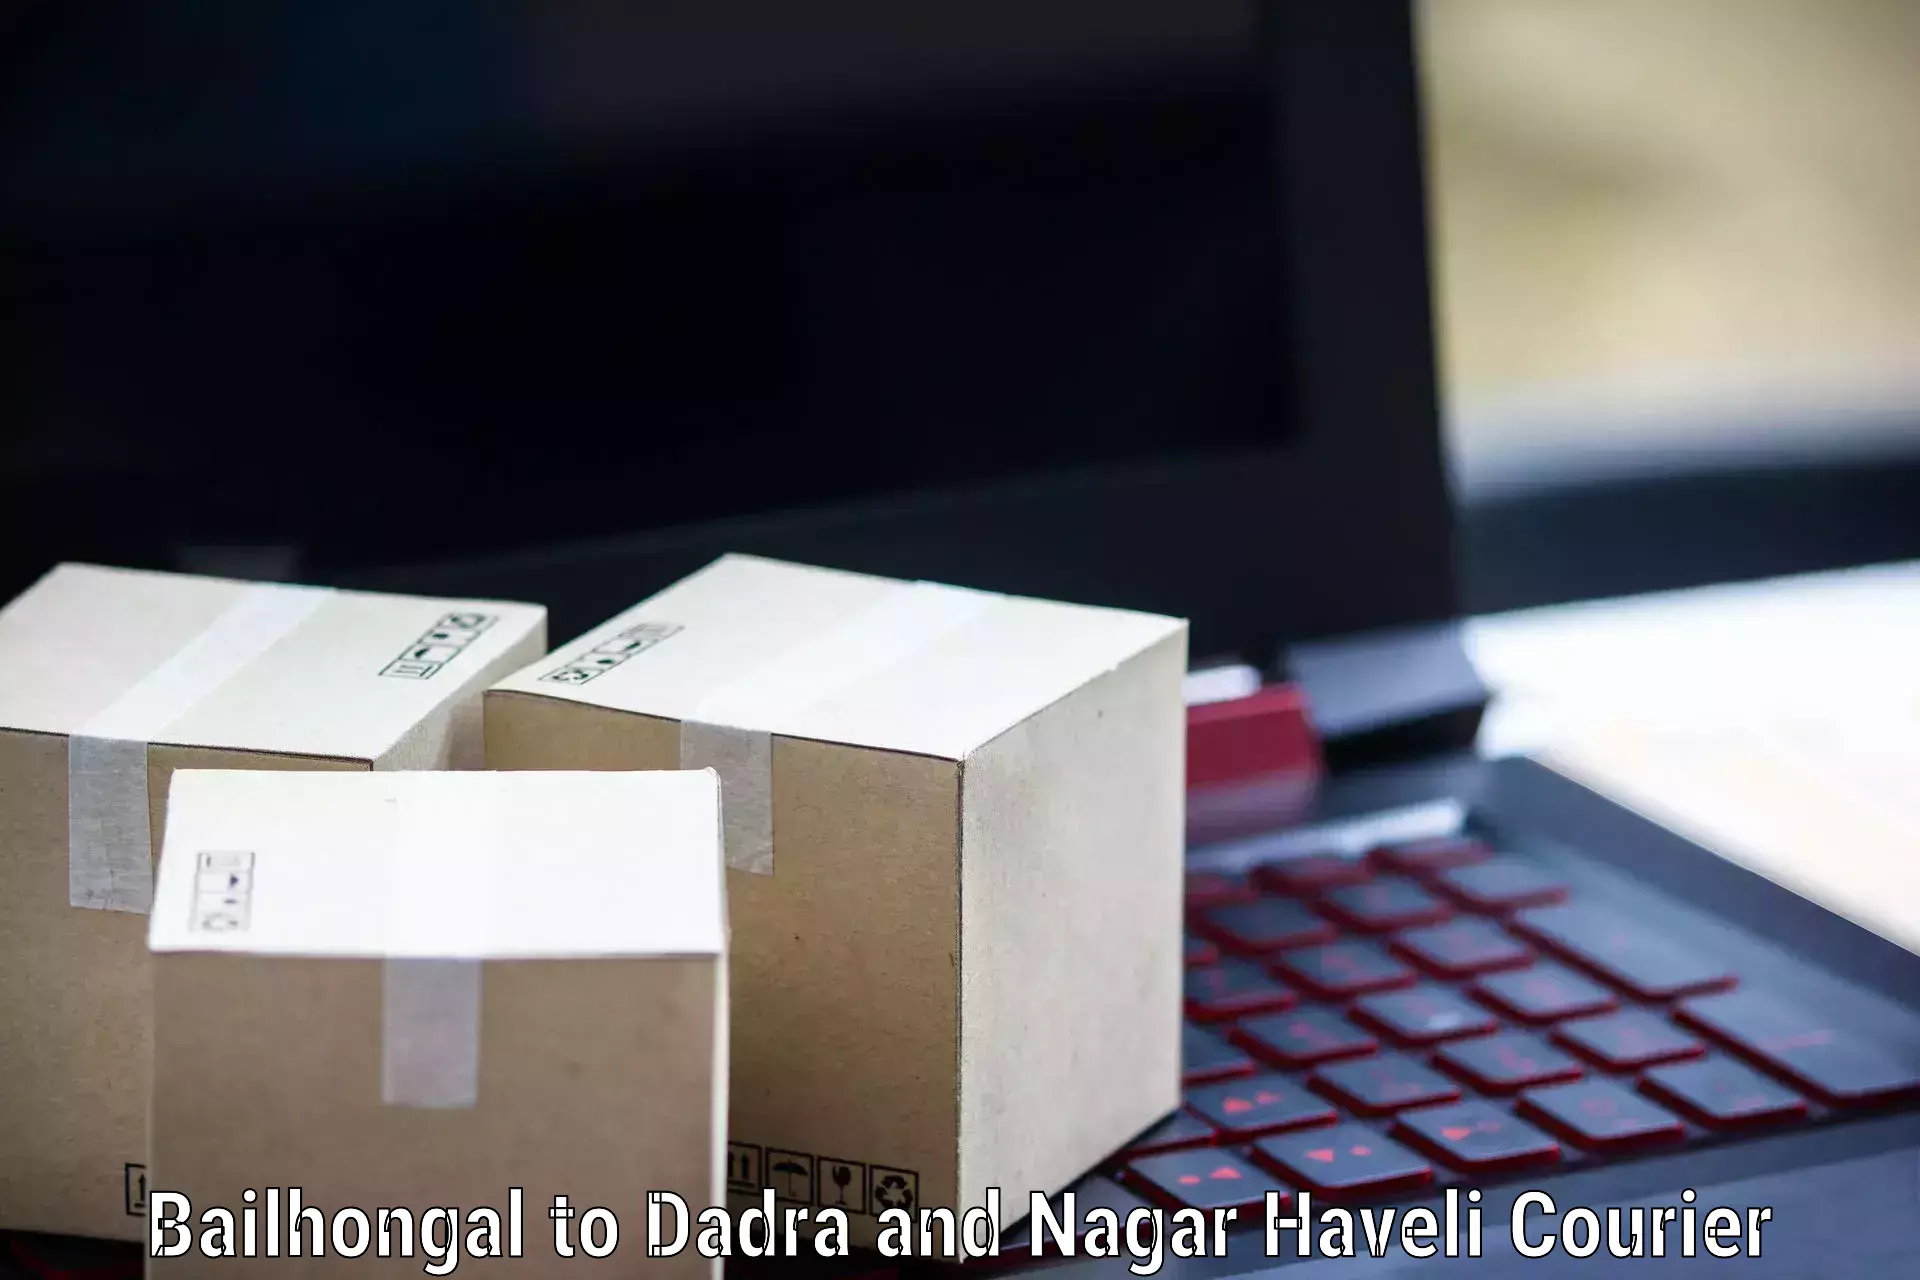 Affordable parcel service Bailhongal to Dadra and Nagar Haveli